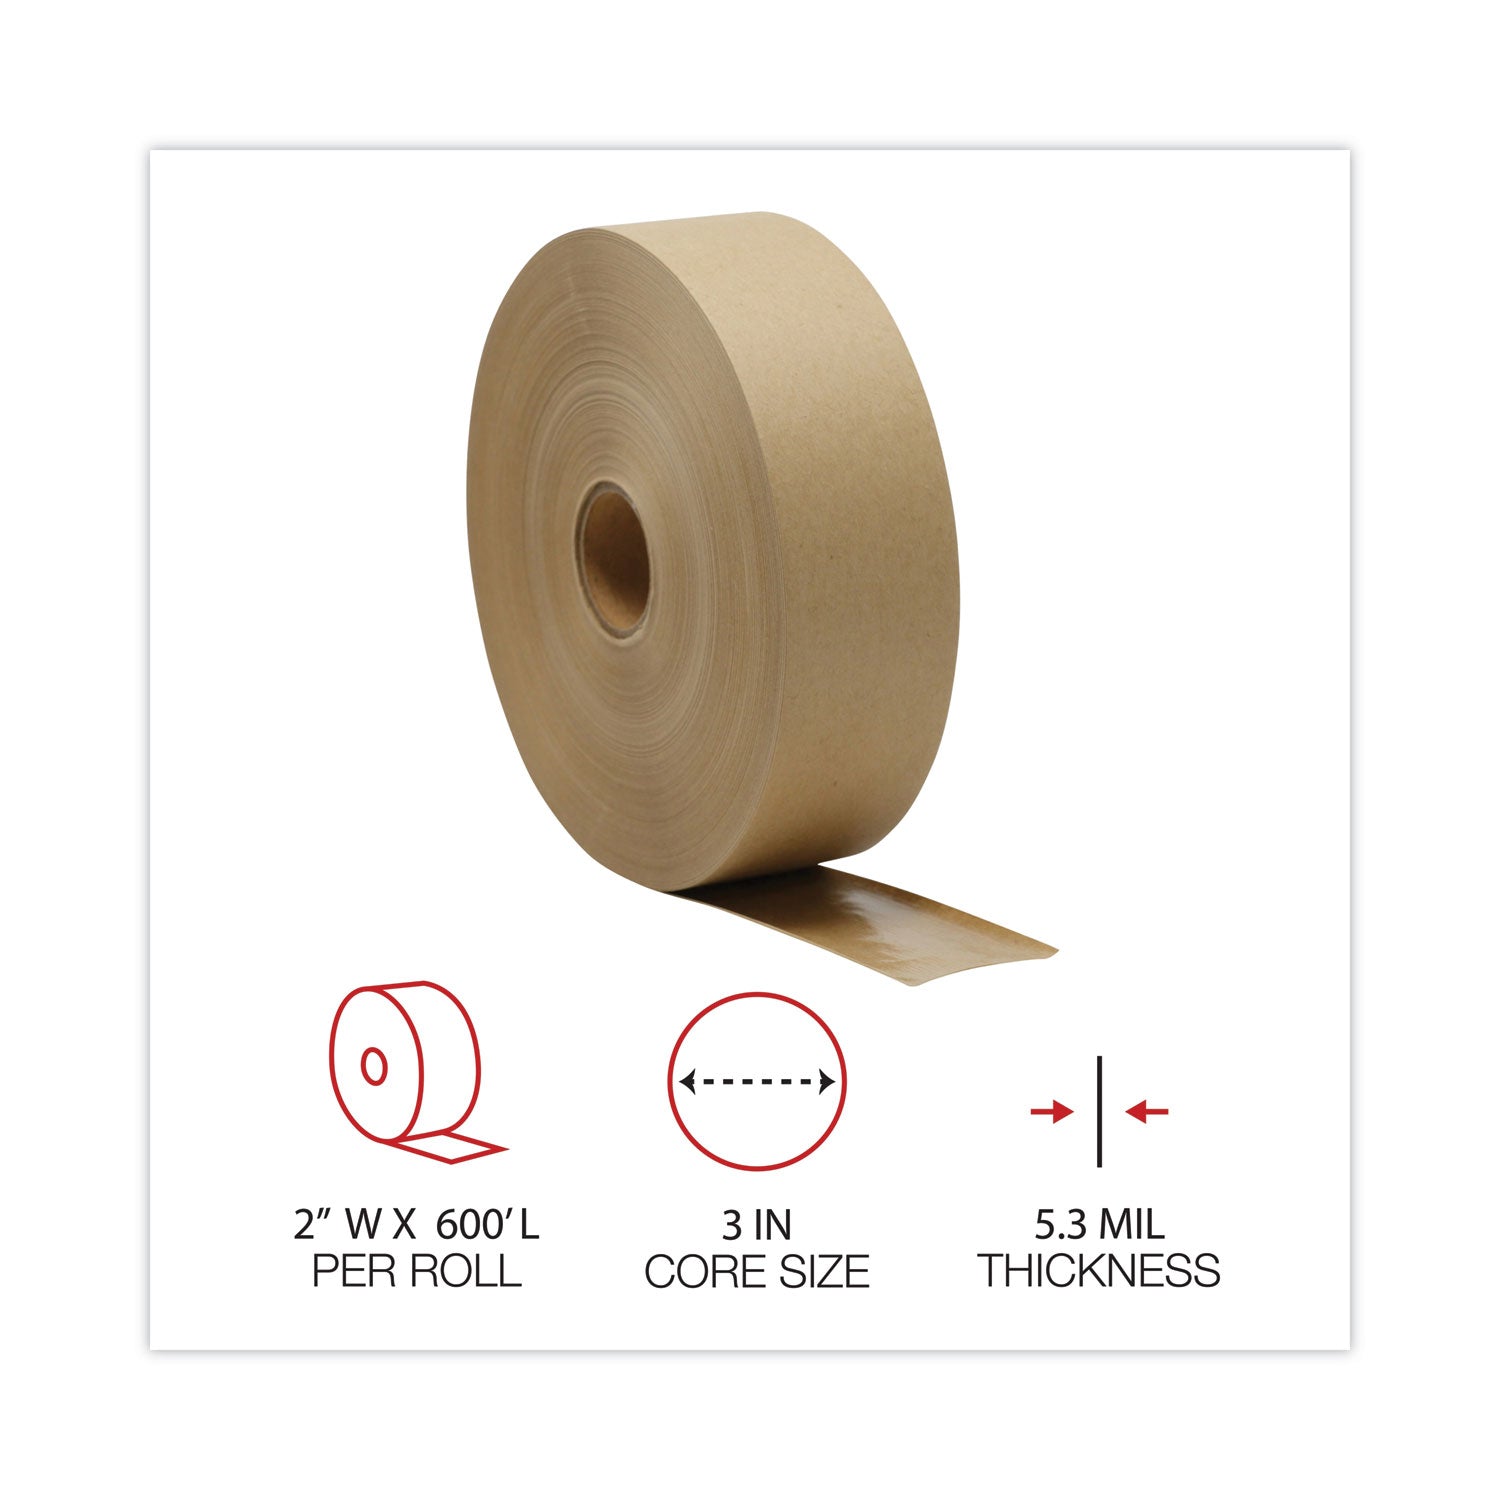 gummed-kraft-sealing-tape-3-core-2-x-600-ft-brown-12-carton_unv2163 - 4